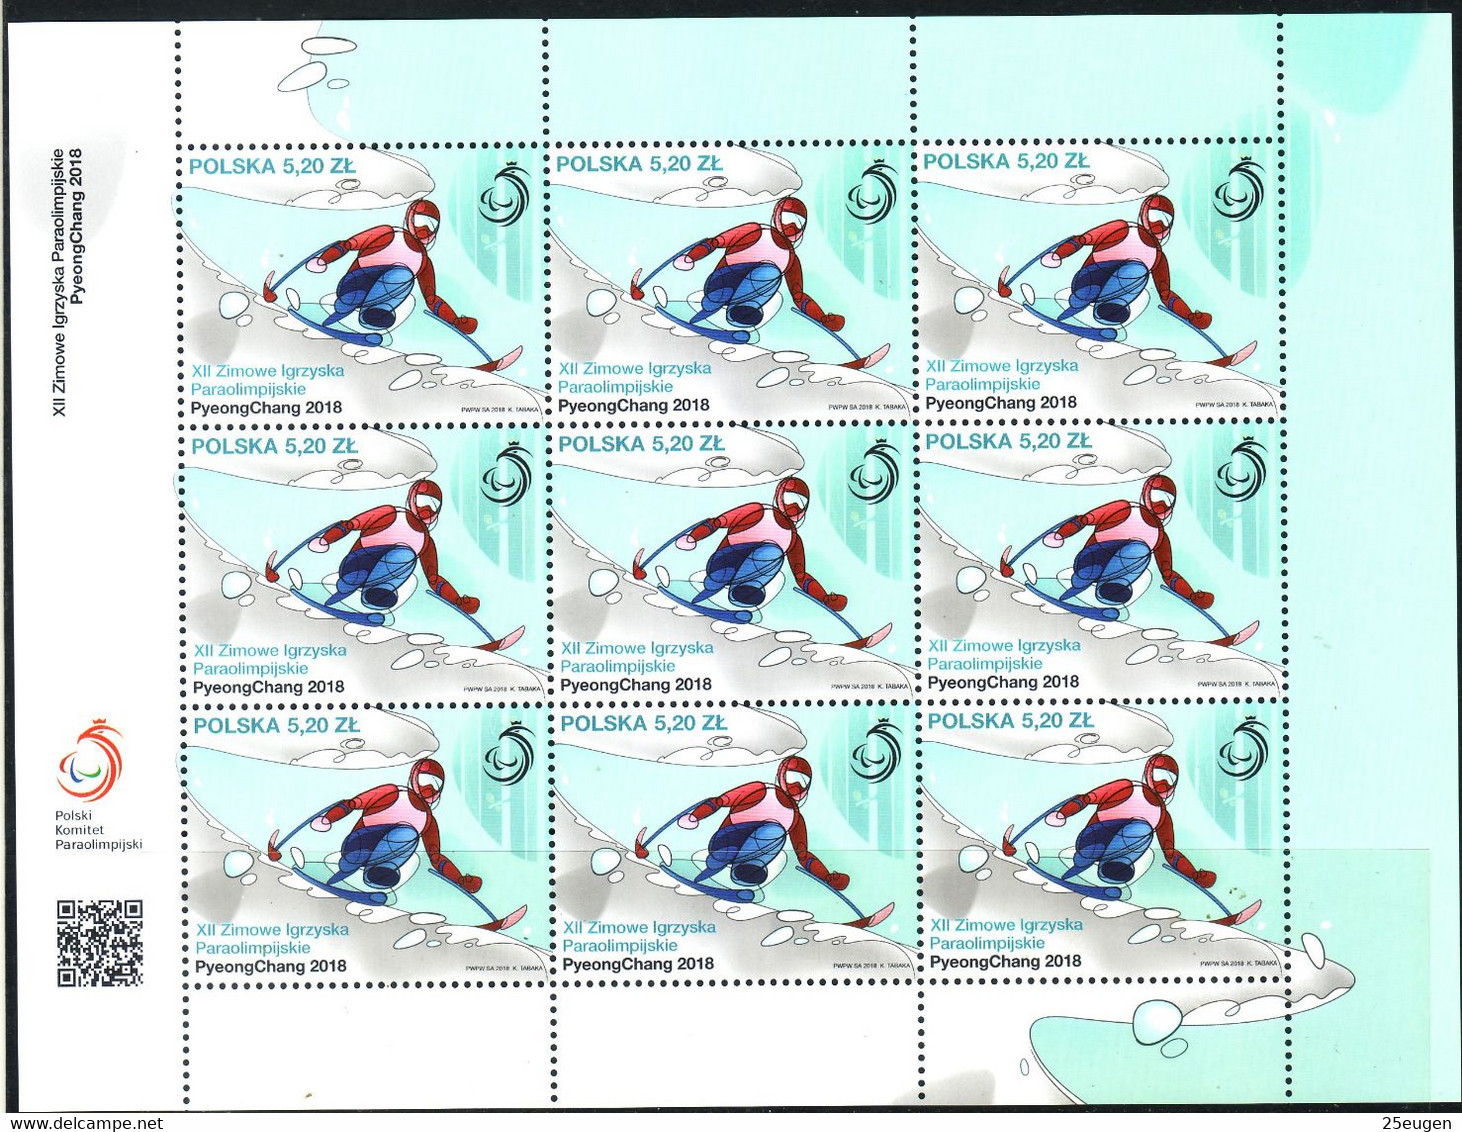 POLAND 2018 Michel No 4975 Klbg MNH - Unused Stamps